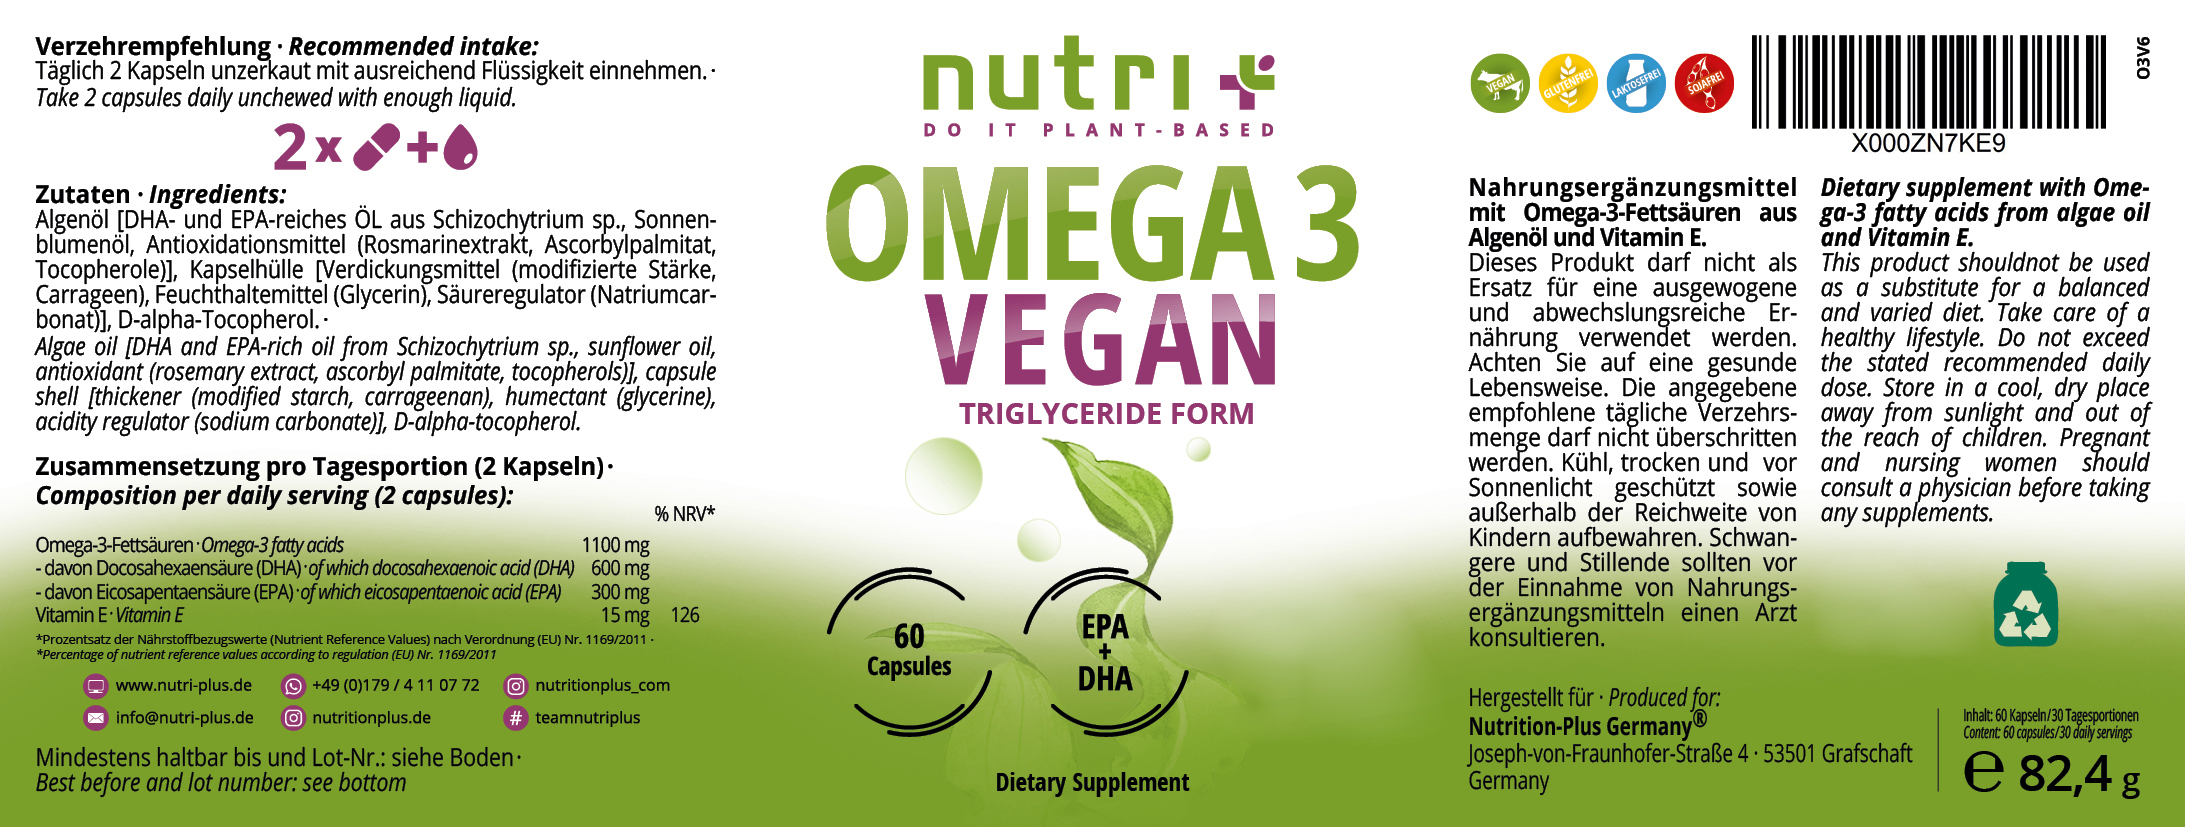 Omega 3 Vegan - with EPA & DHA